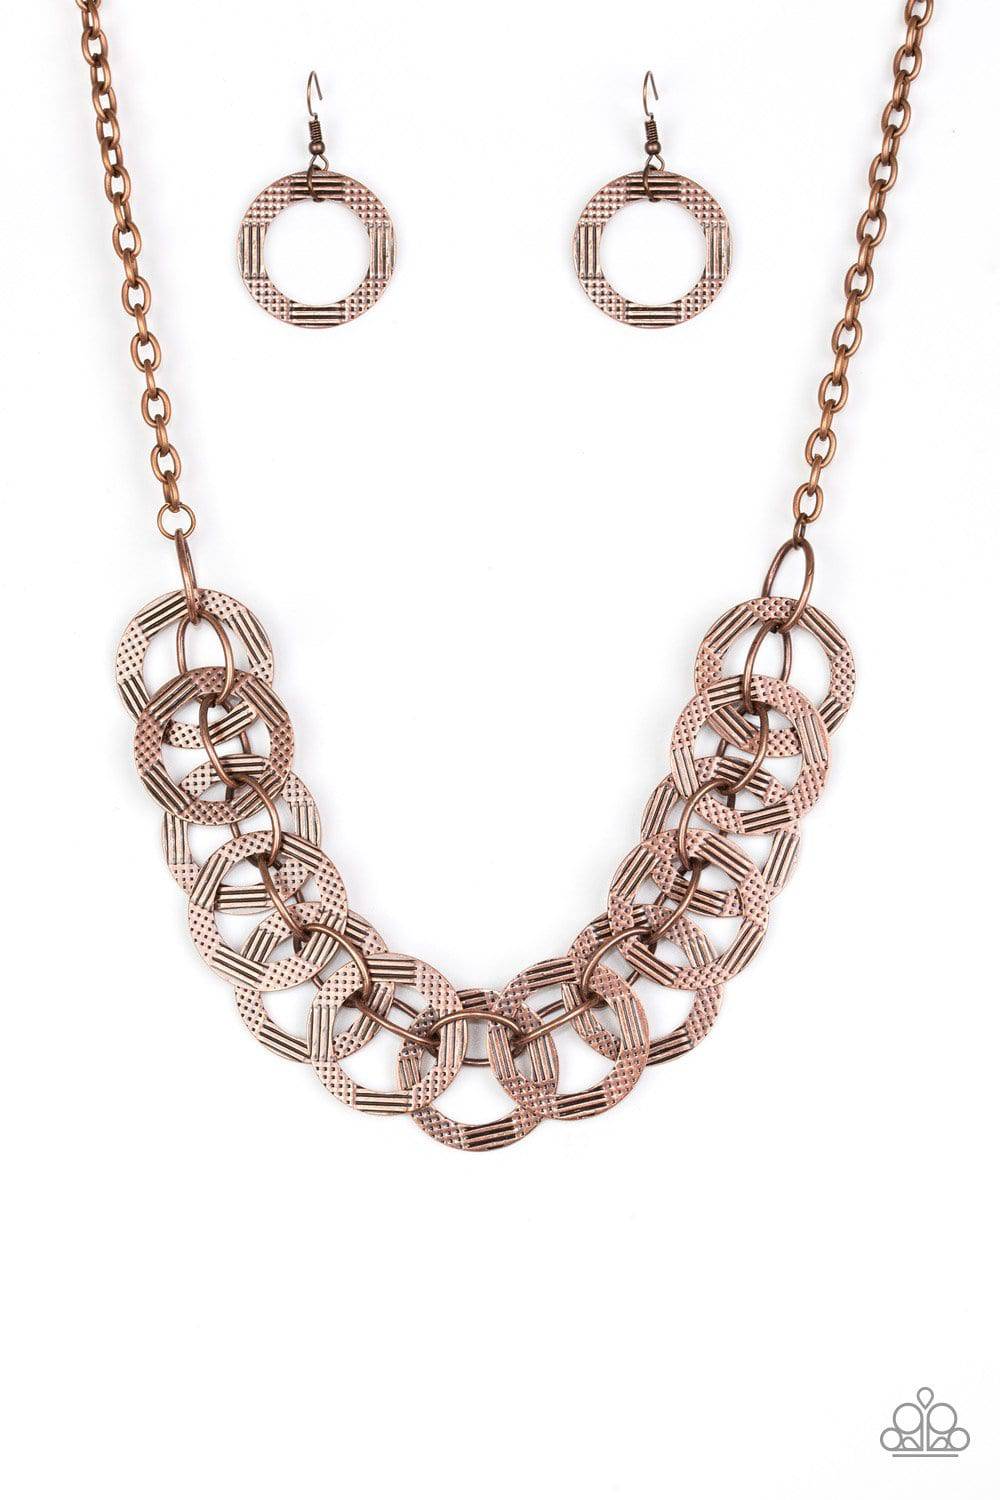 The Main Contender - Copper Necklace - Paparazzi Accessories - GlaMarous Titi Jewels